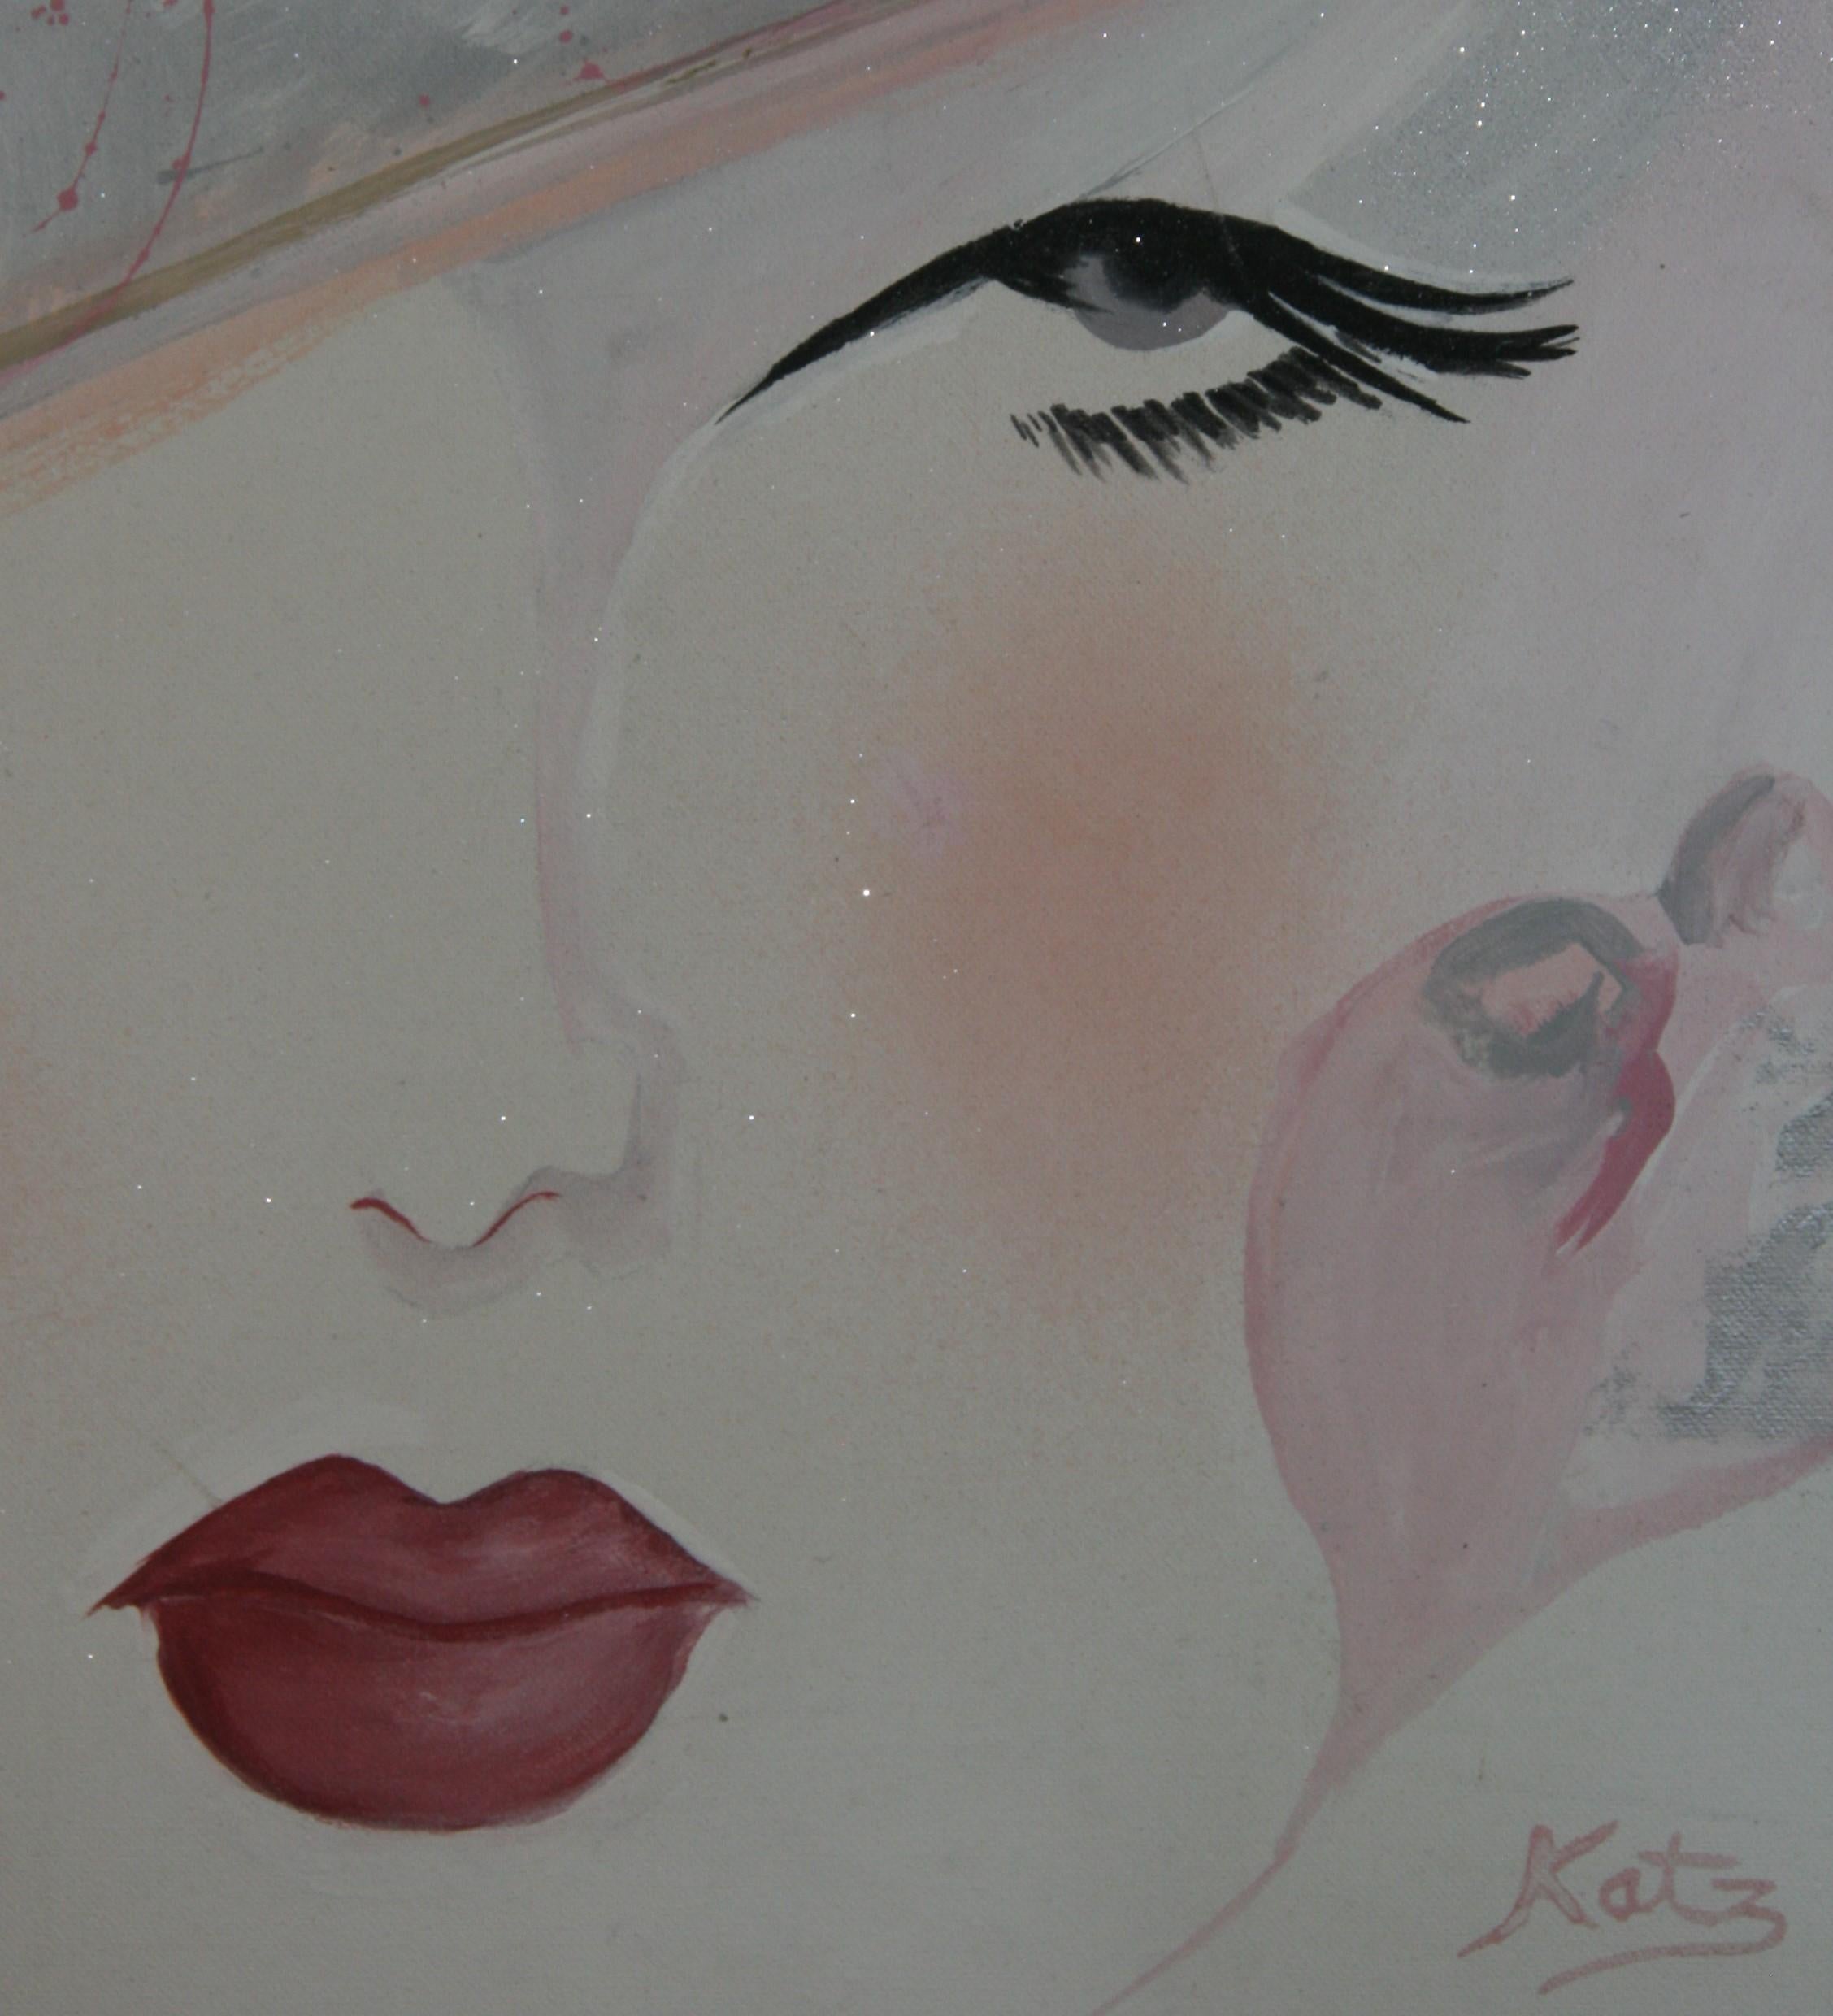 4059 Red Lips acrylic Pop Art portrait set in a custom gilt frame
Image size 15.5x23